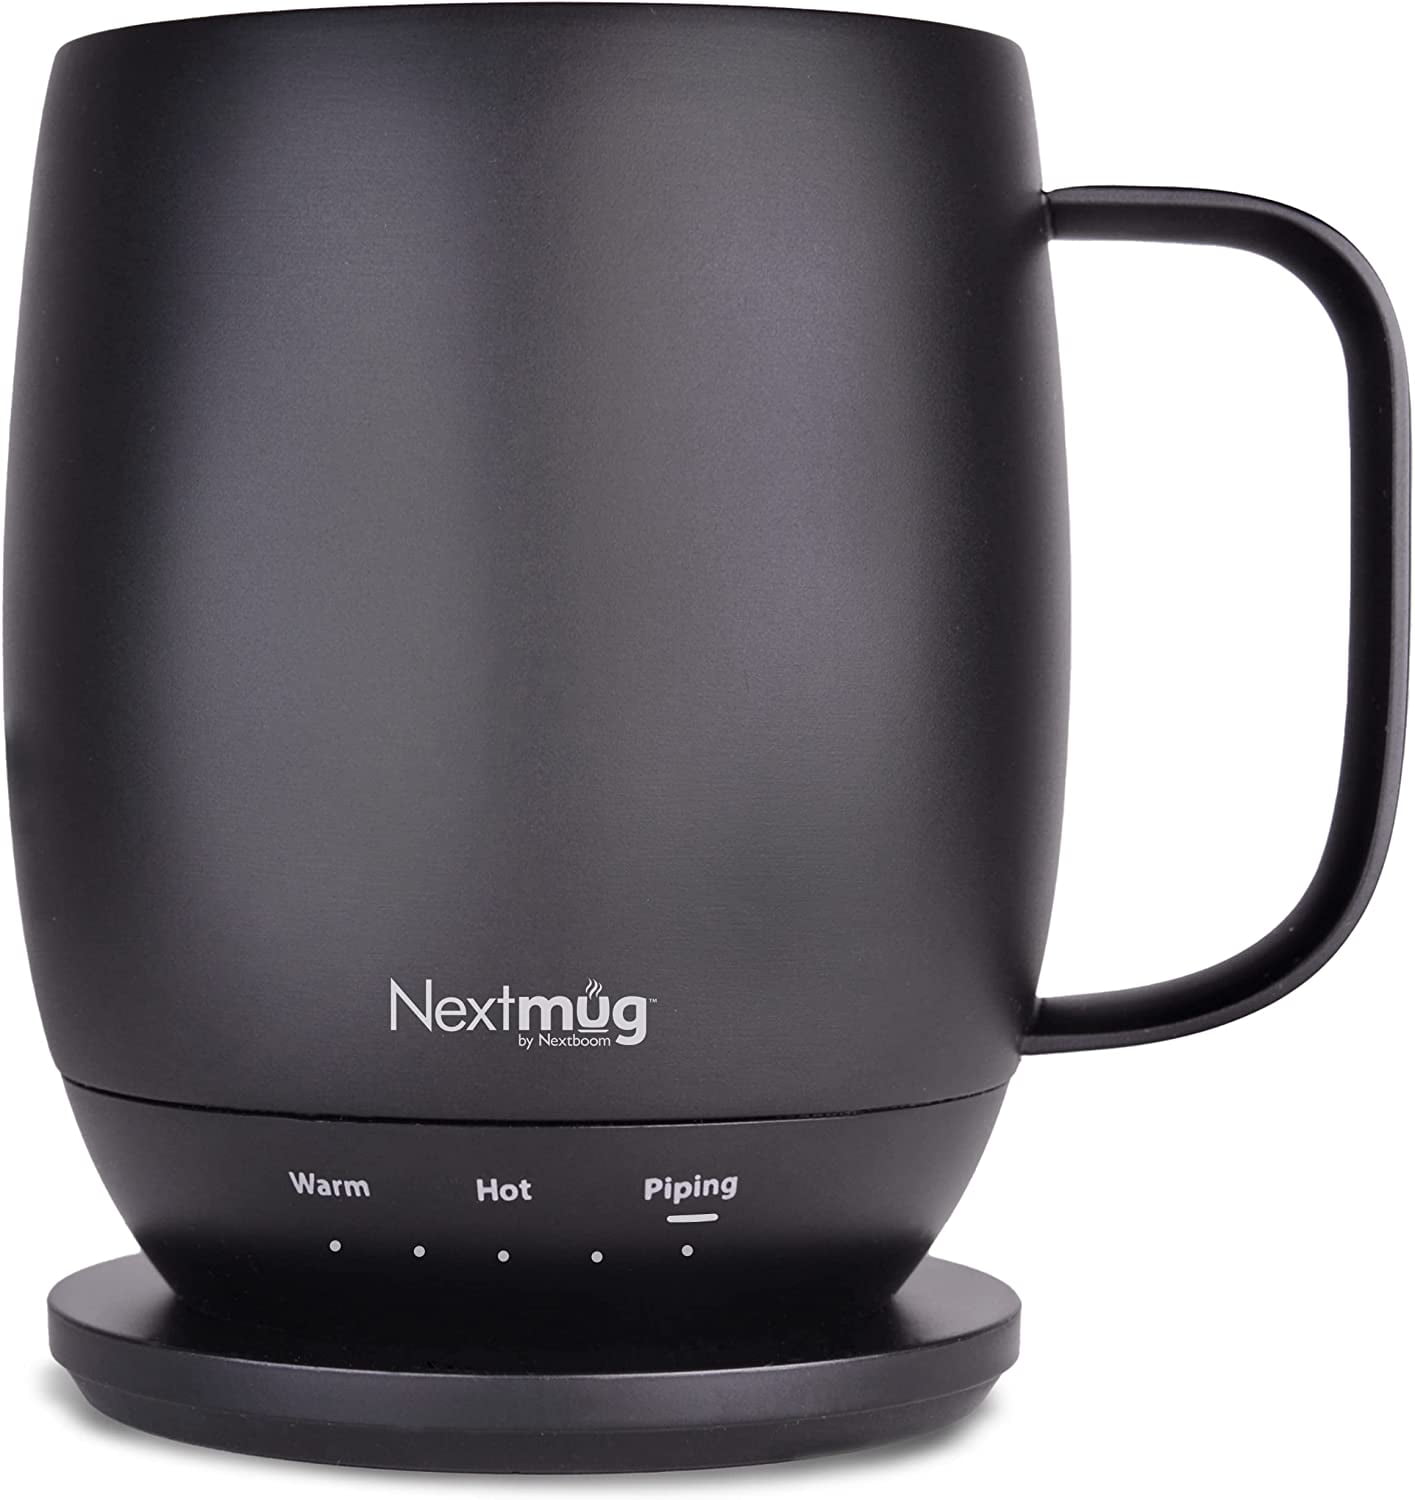 Ember Mug² 14-Oz. White Heated Coffee Mug + Reviews